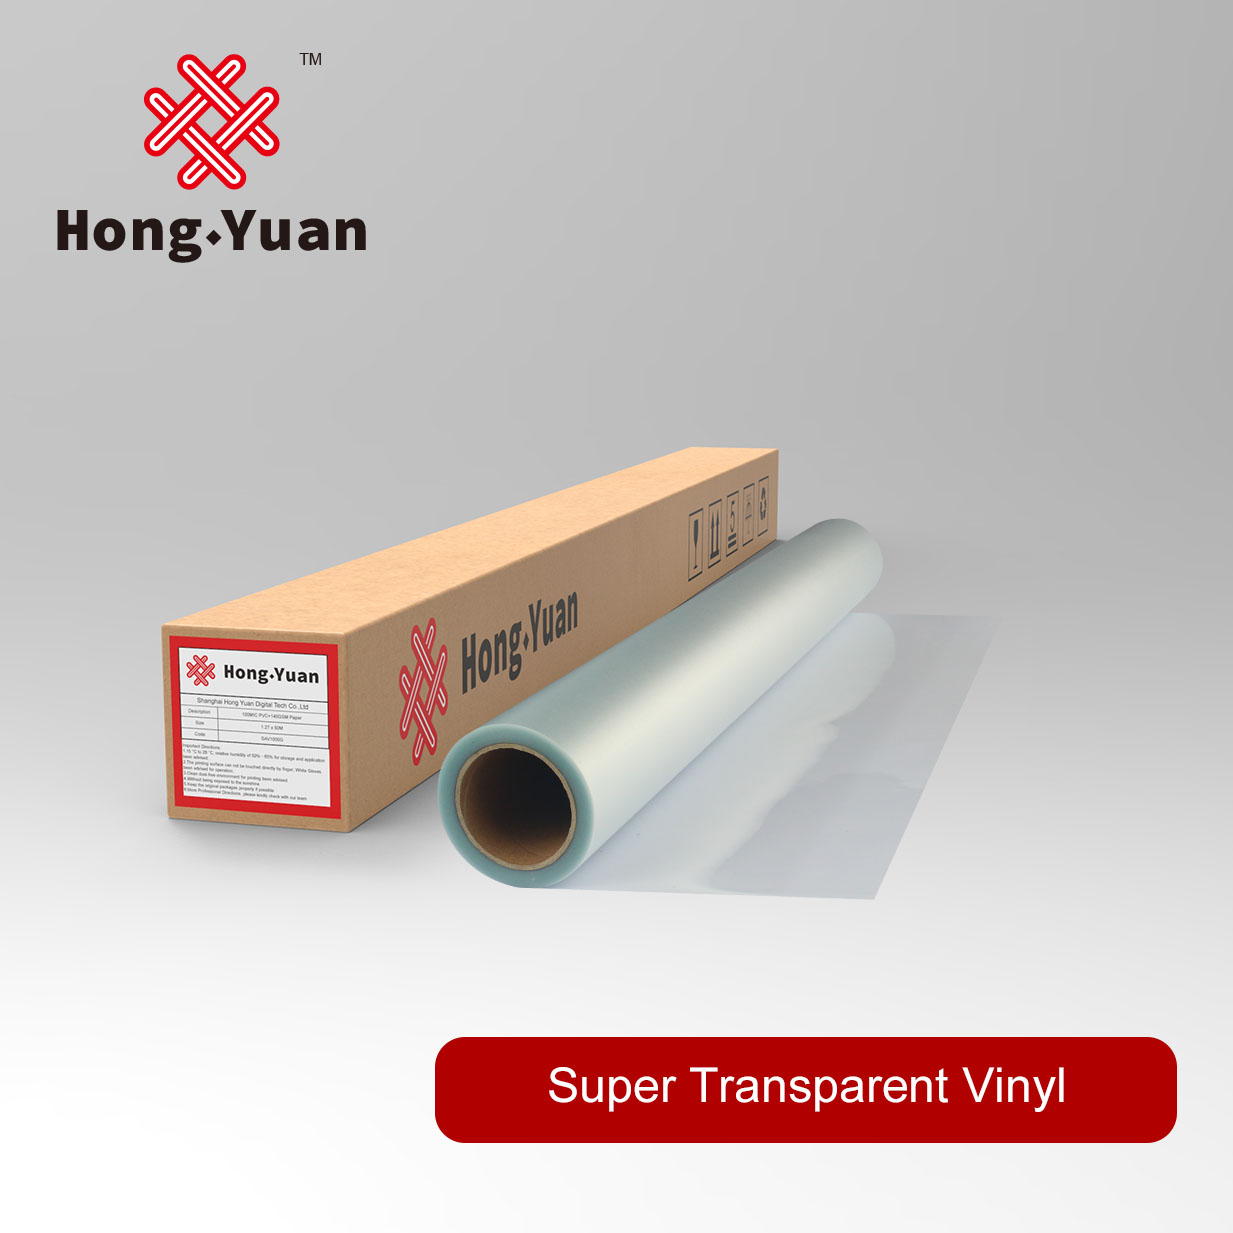 SuperTransparent Vinyl TAV3100G